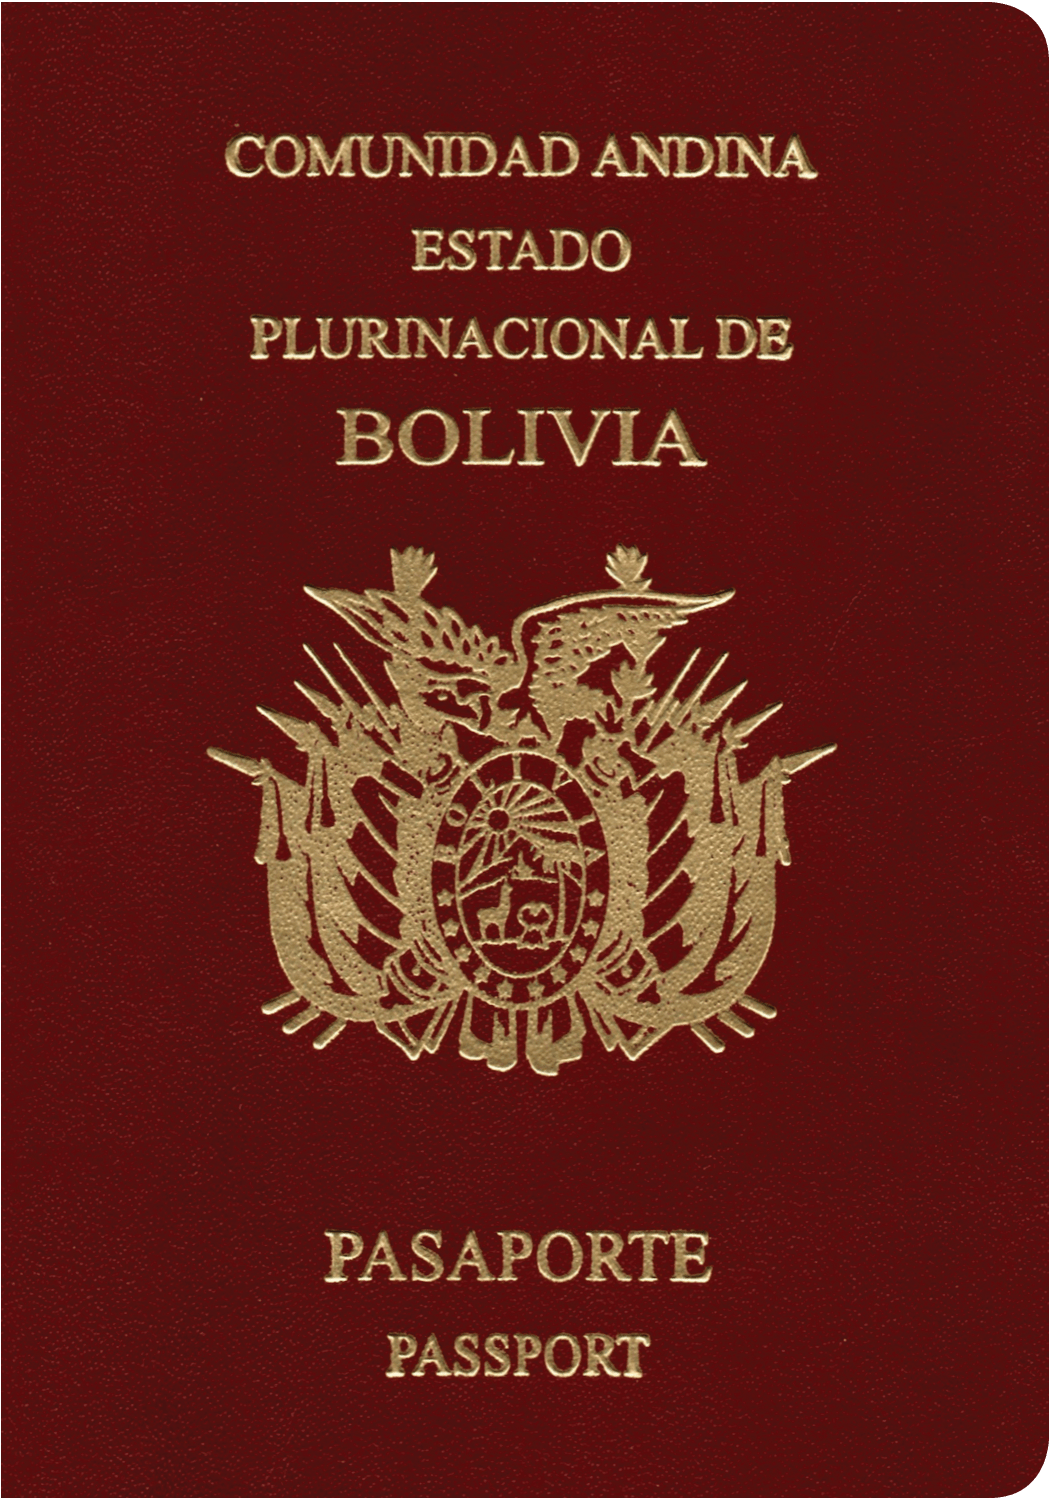 A regular or ordinary Bolivian passport - Front side